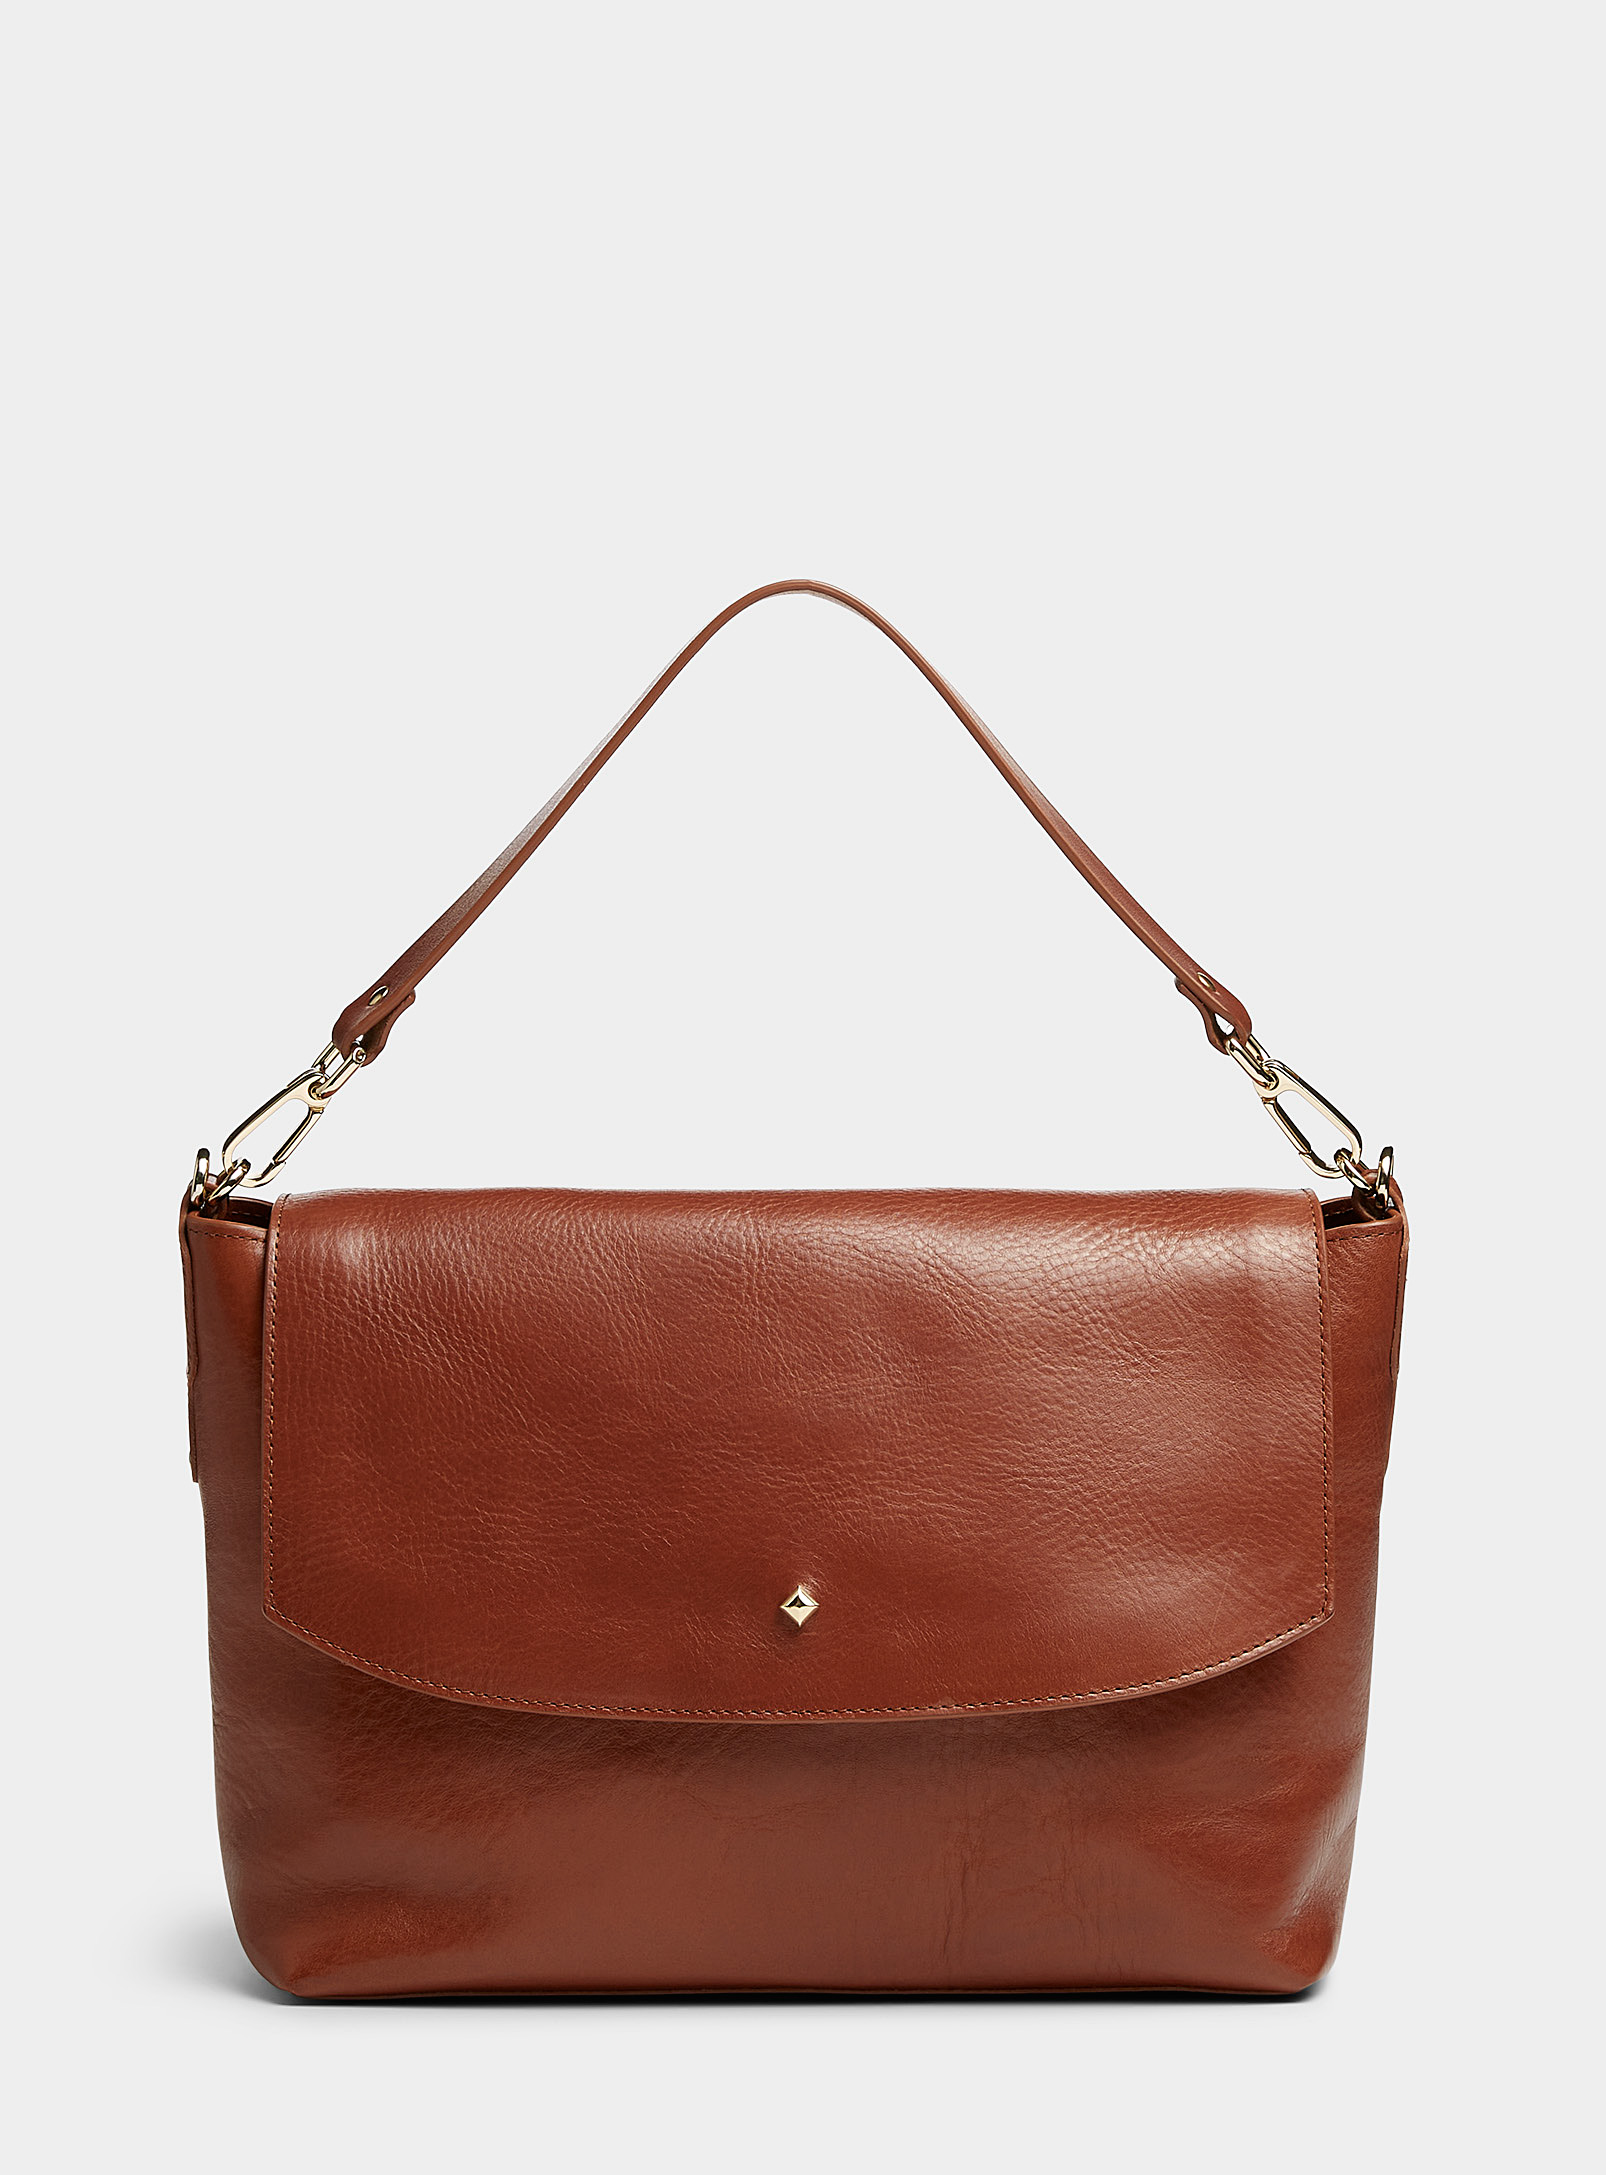 HERBERT Frère Soeur - Women's Benson minimalist leather flap bag